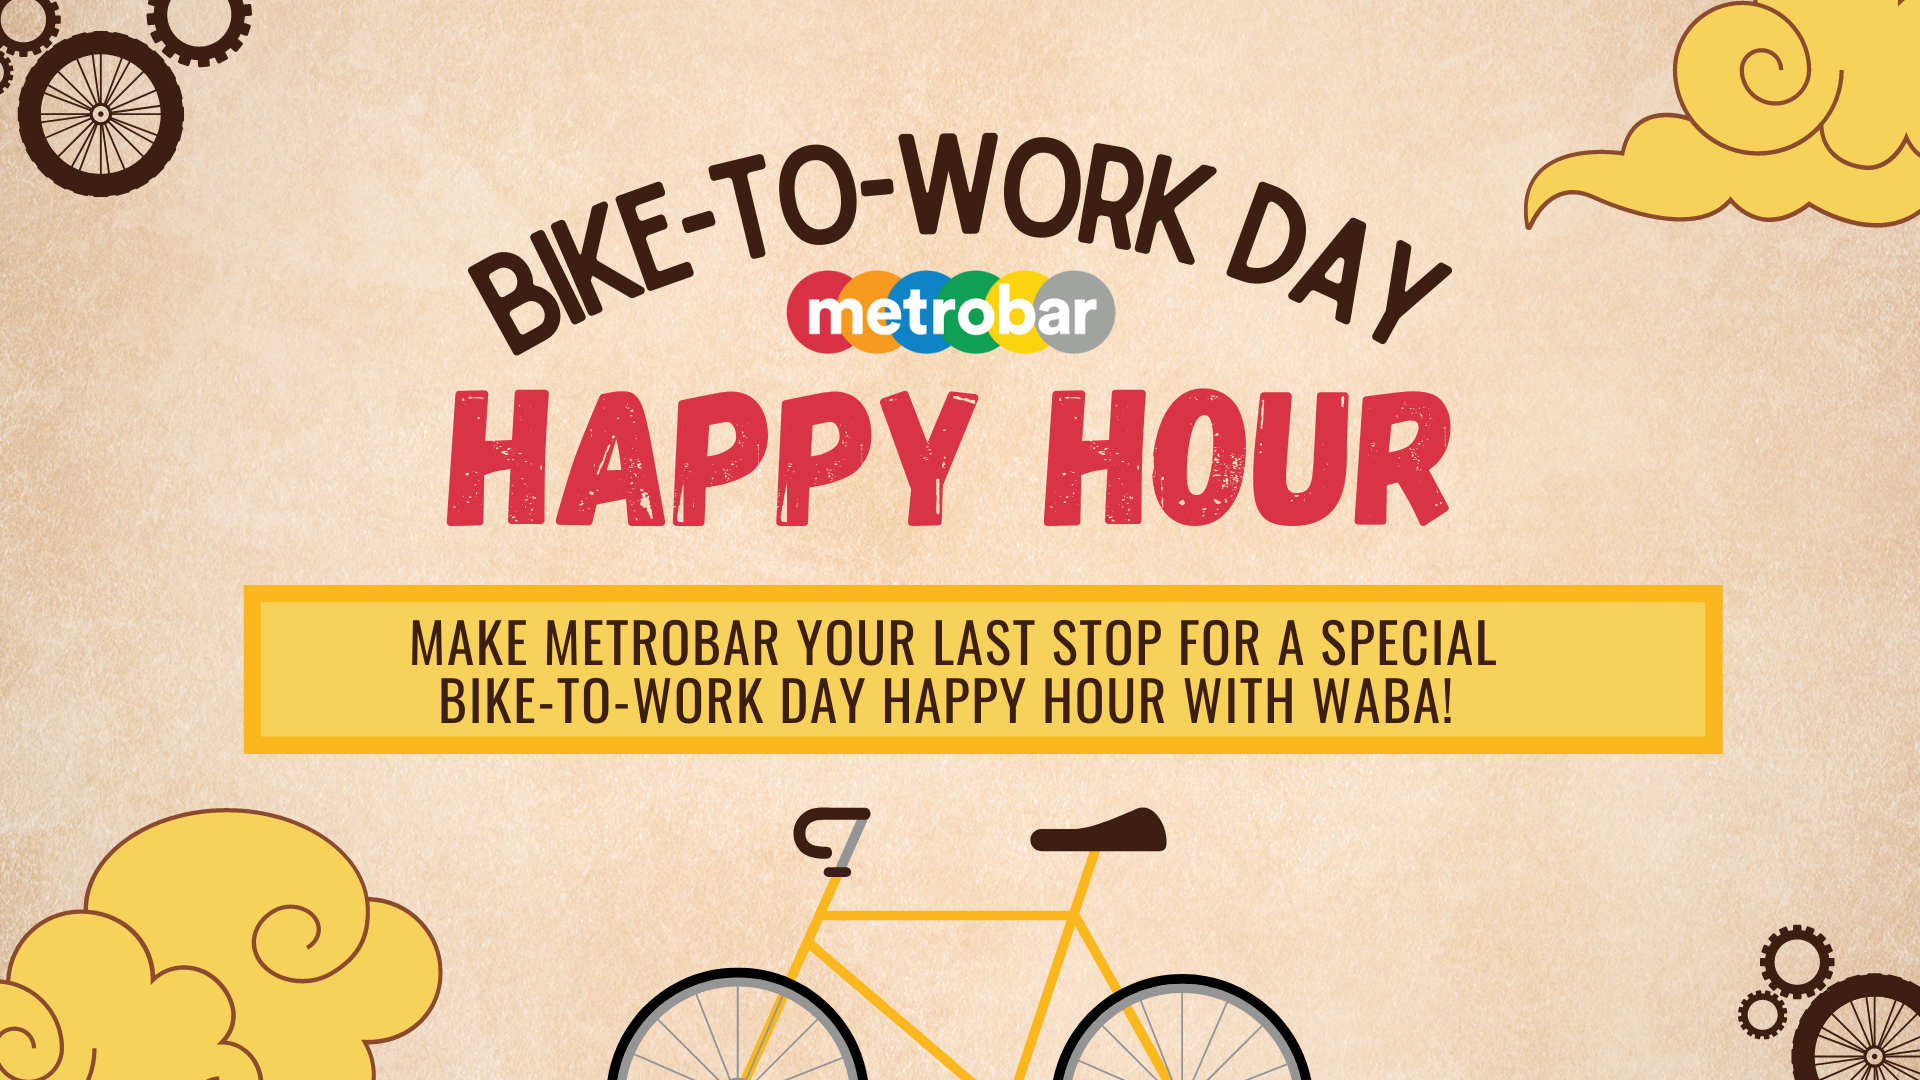 Bike-to-Work Day Happy Hour at metrobar